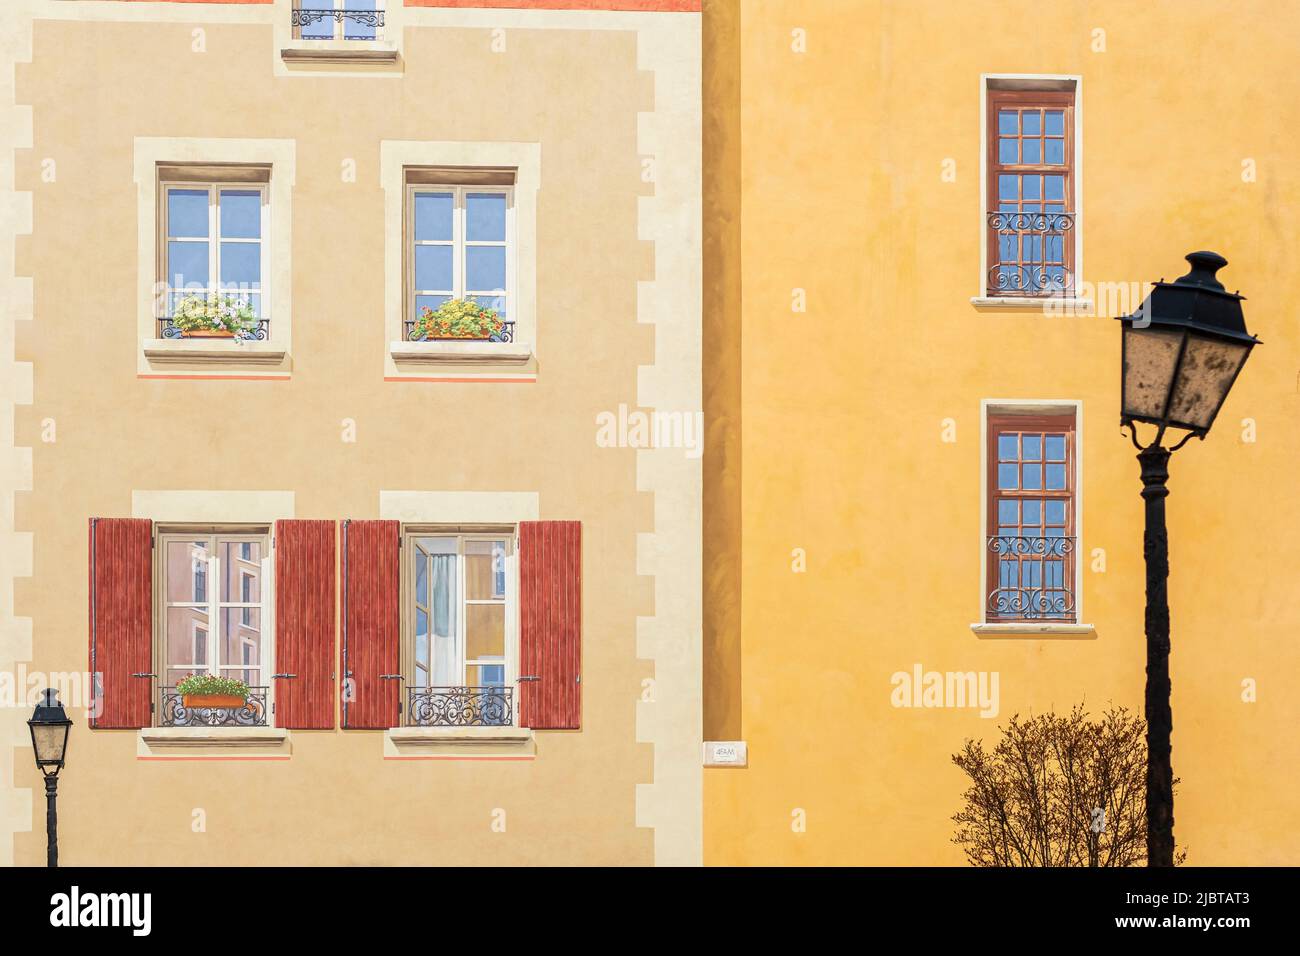 France, Ain, Trevoux, trompe l'oeil facade in the historic center Stock Photo